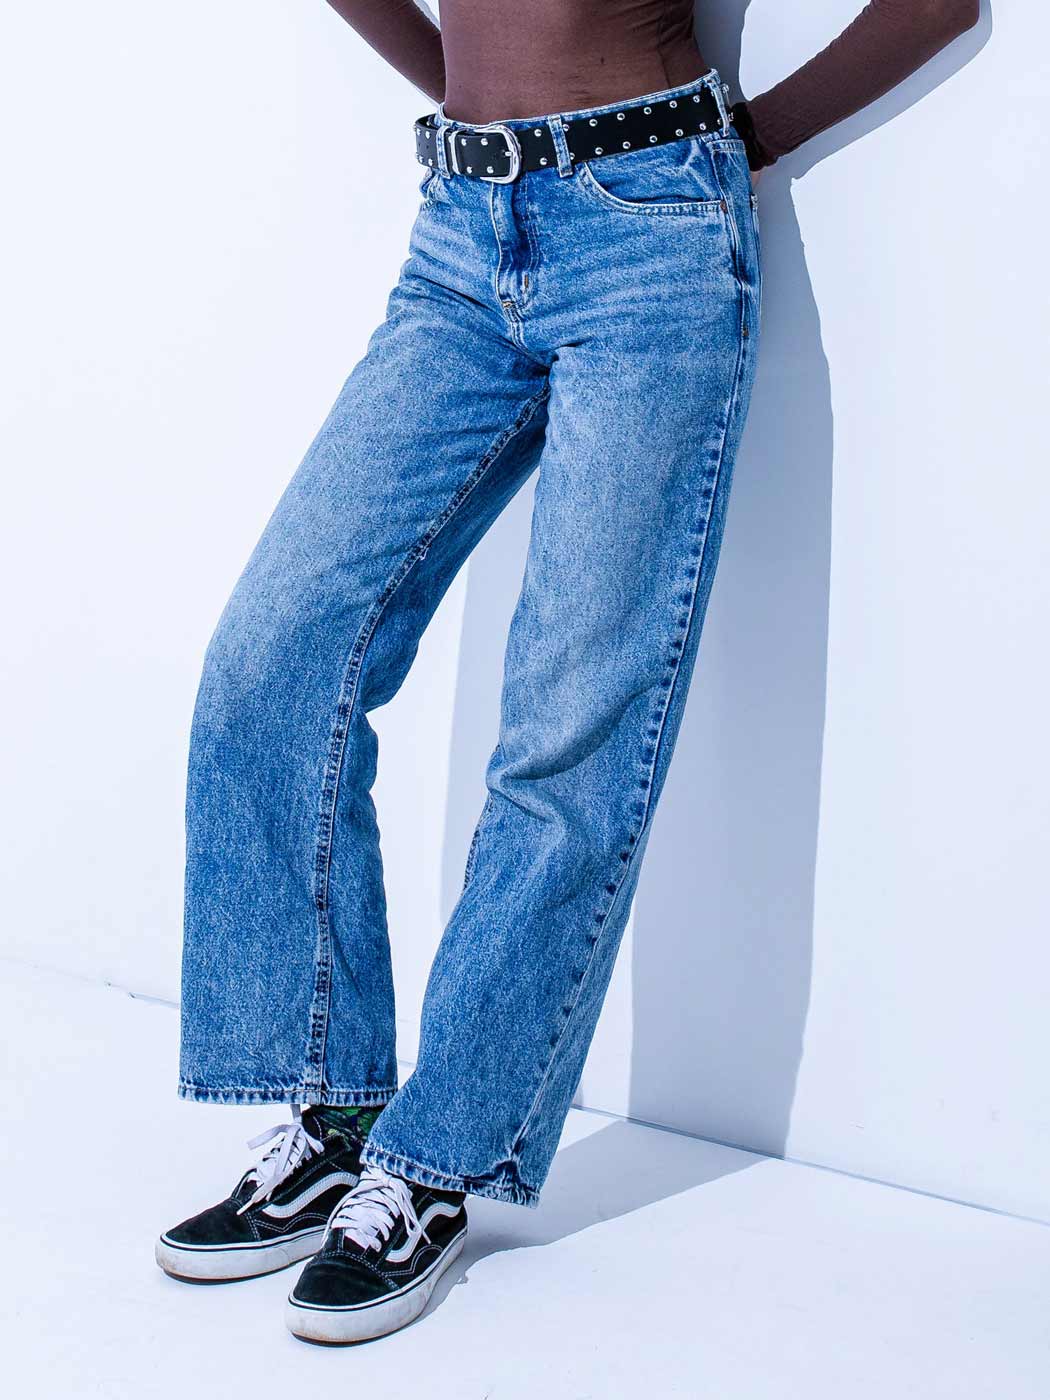 Frau in blauer, gerader geschnittener Jeans